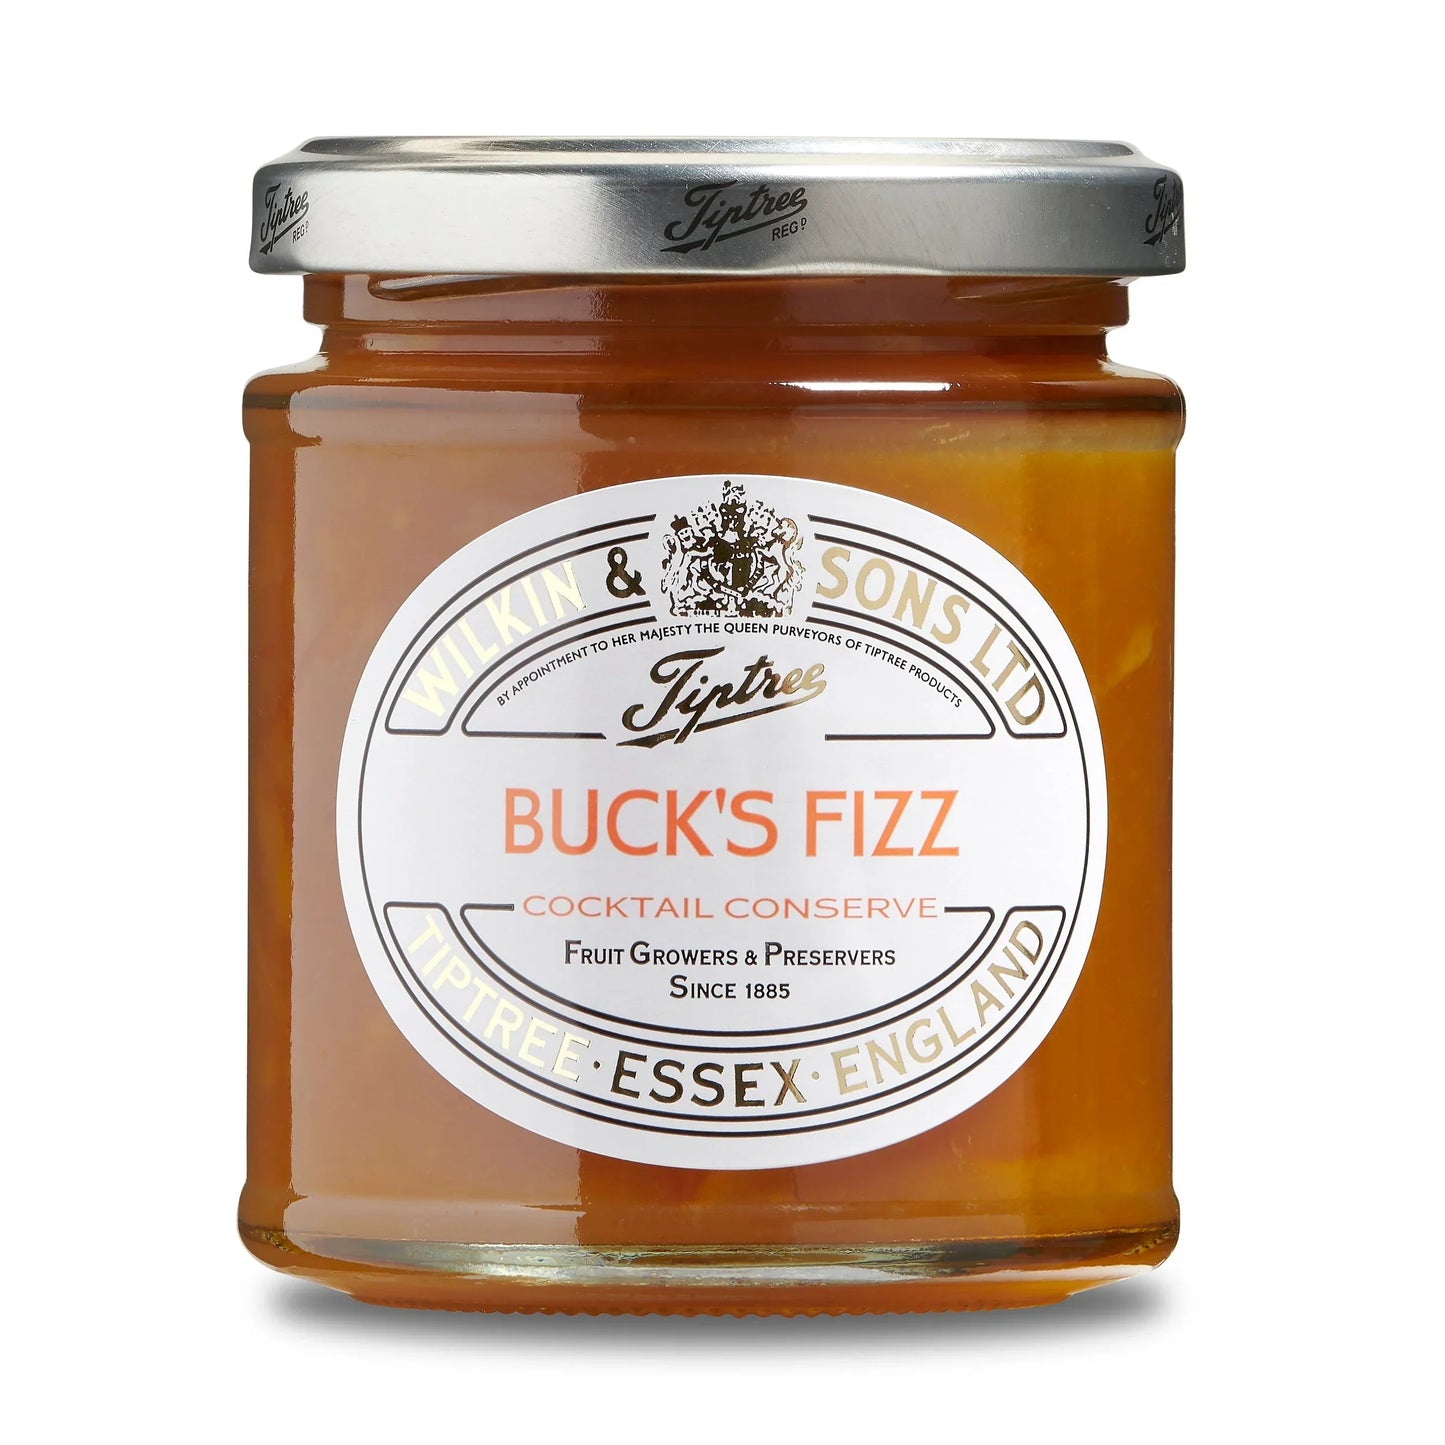 Tiptree Bucks Fizz Conserve 227g